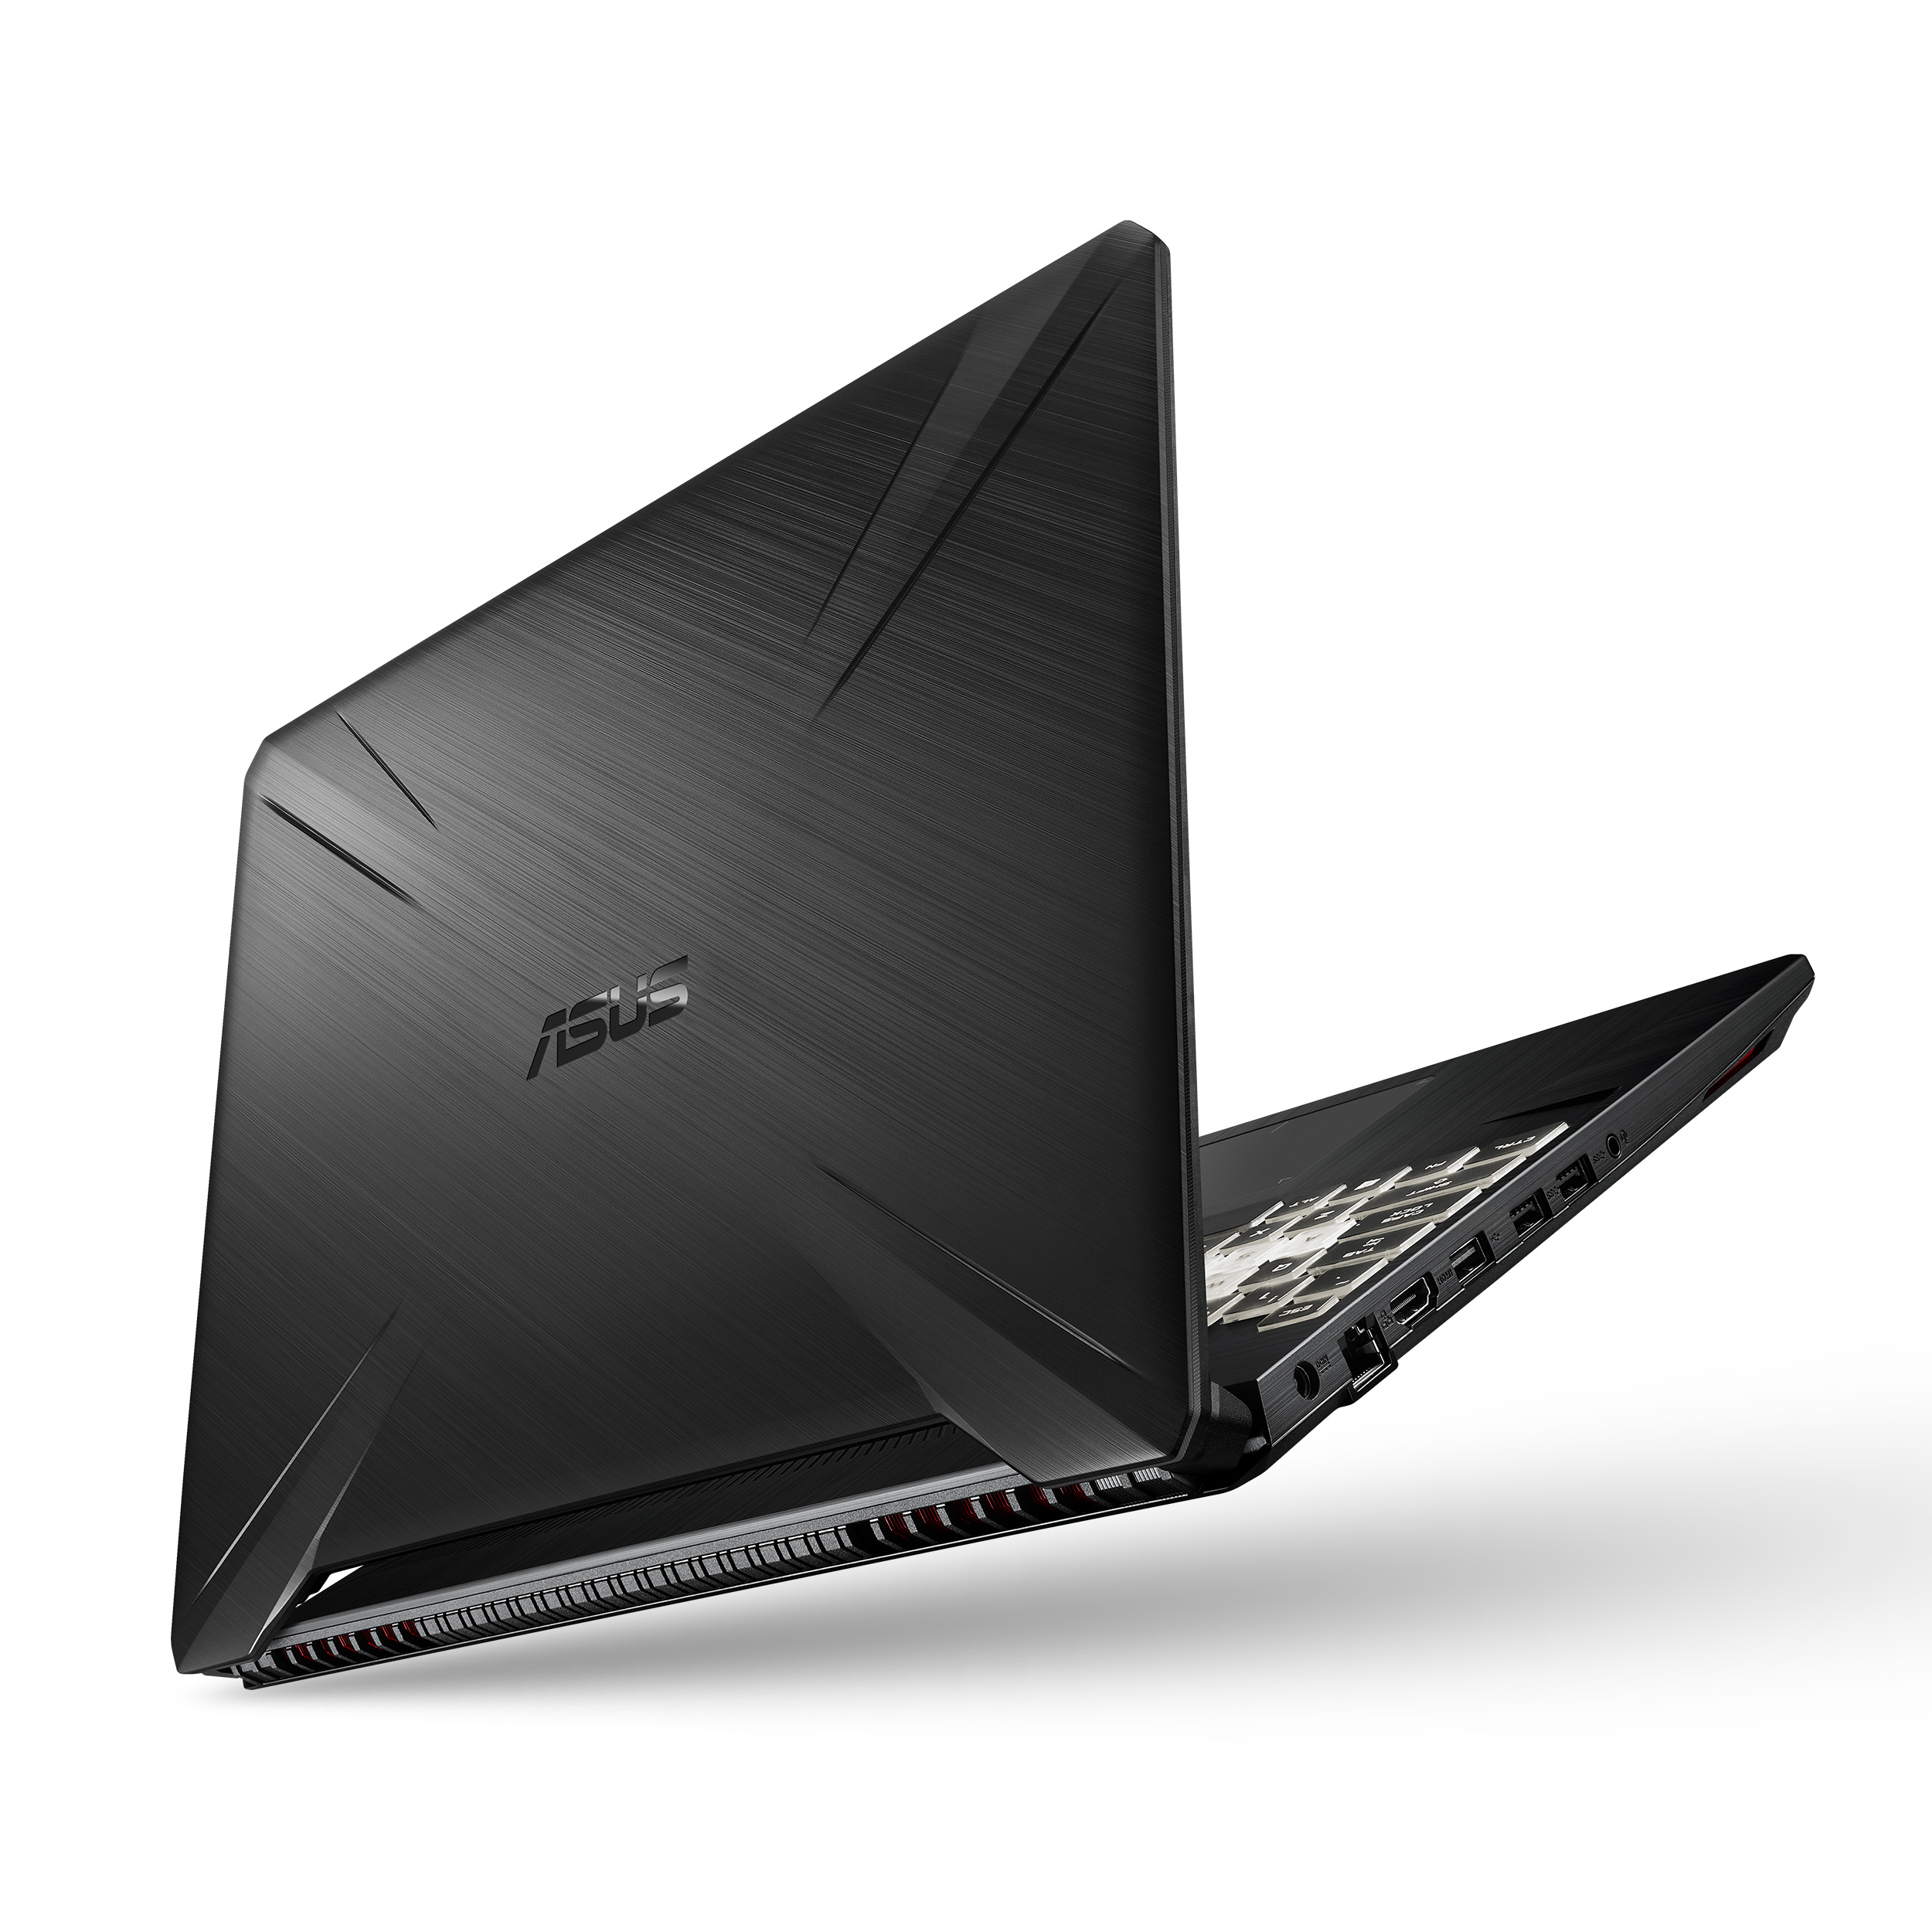 ASUS 15.6" FHD Gaming Laptop, AMD Ryzen 7 R7-3750H, 8GB RAM, NVIDIA GeForce GTX 1650 4GB, 256GB SSD, Windows 10 Home, Black, FX505DT-WB72 - image 2 of 6